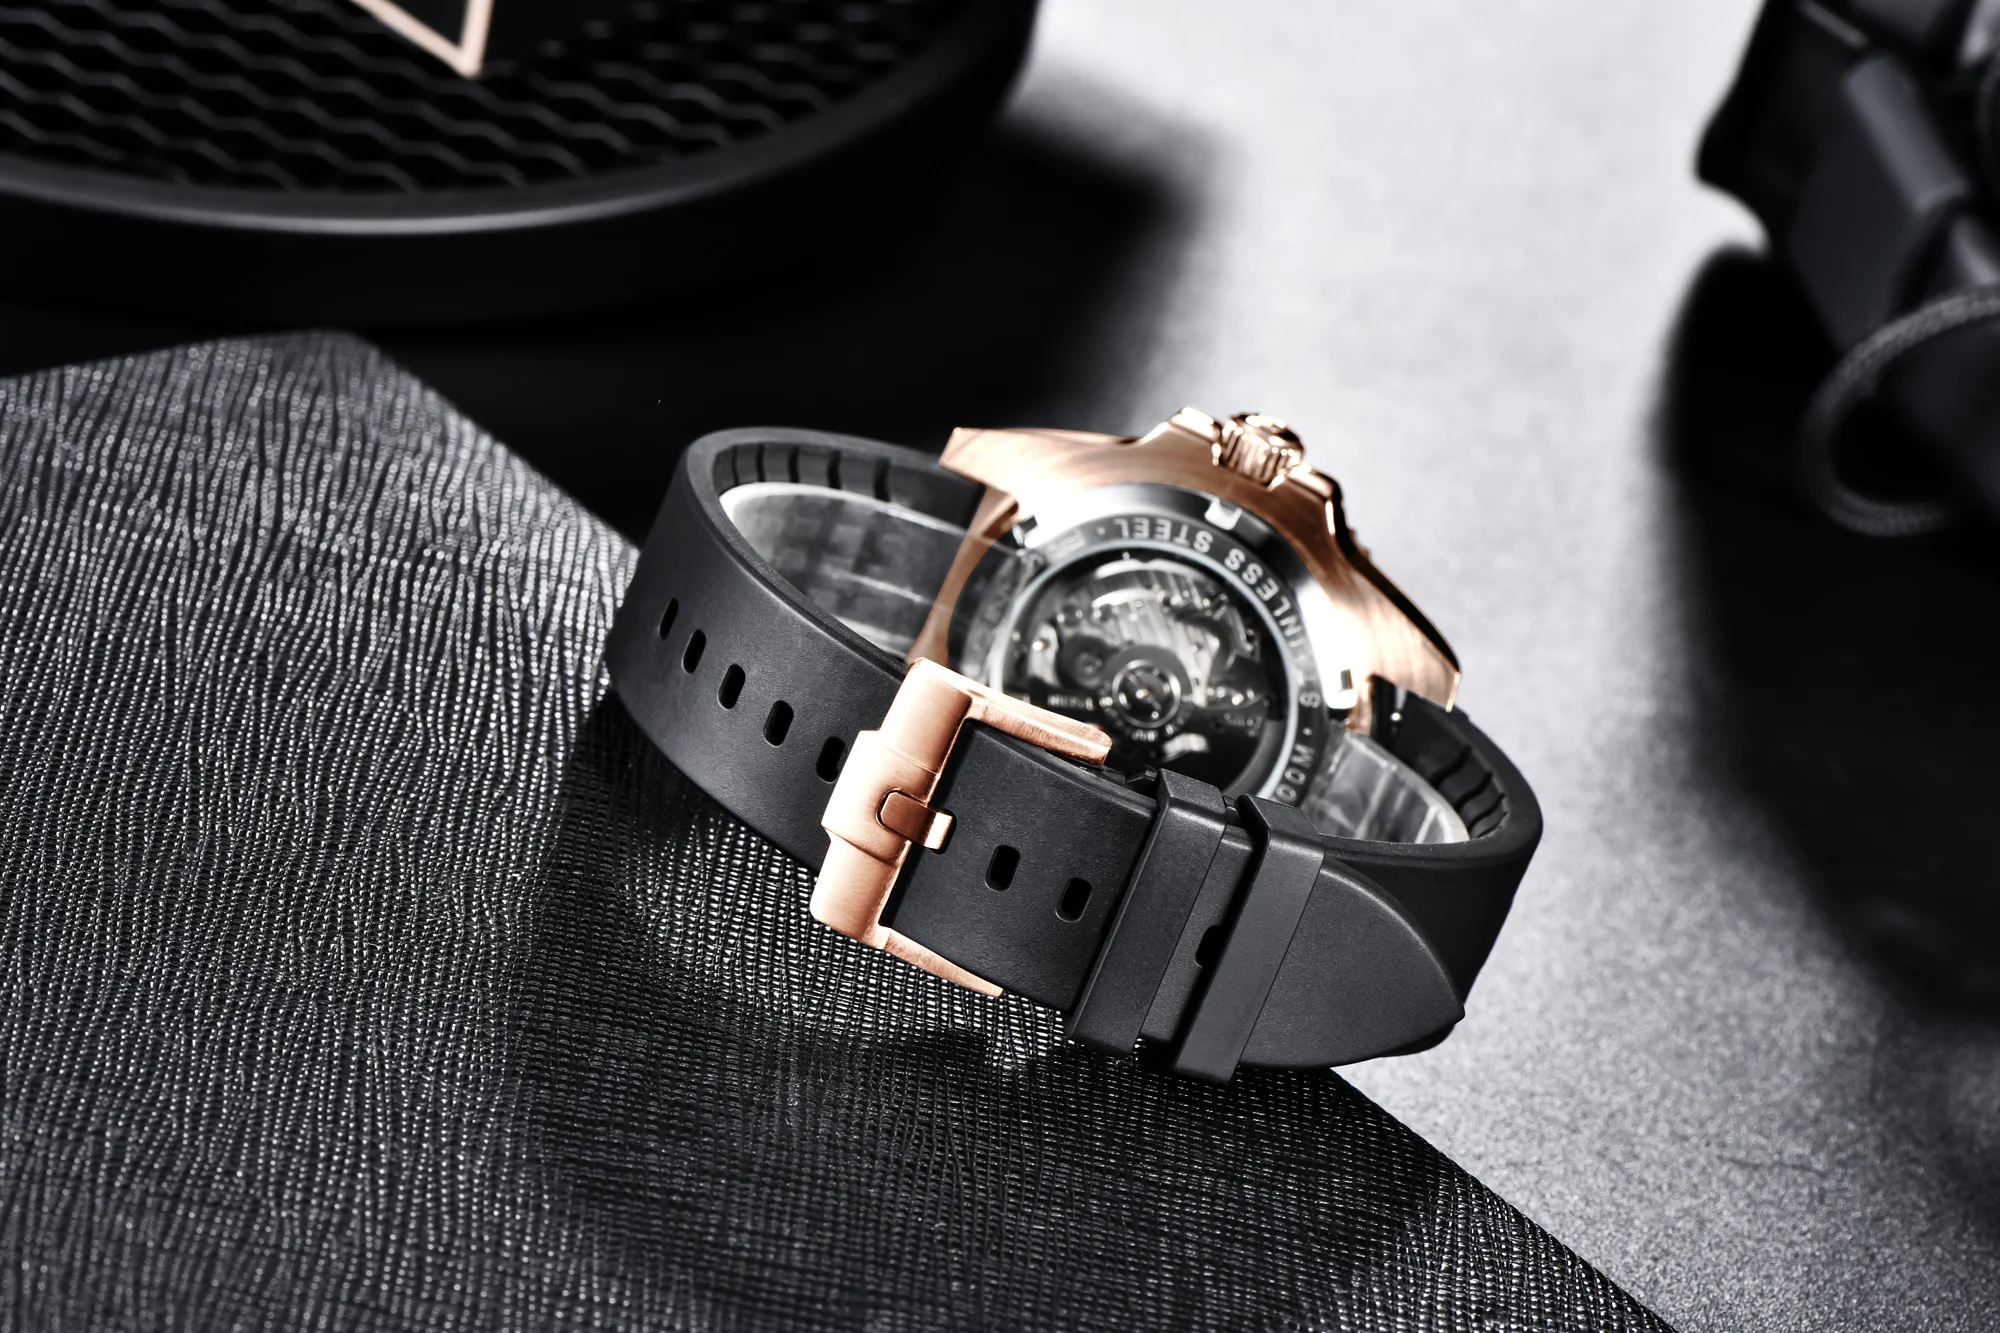 PAGANI DESIGN Top Brand Sports Men Mechanical Wristwatch Sapphire Luxury Automatic Watch Men's Stainless Steel Waterproof Clock